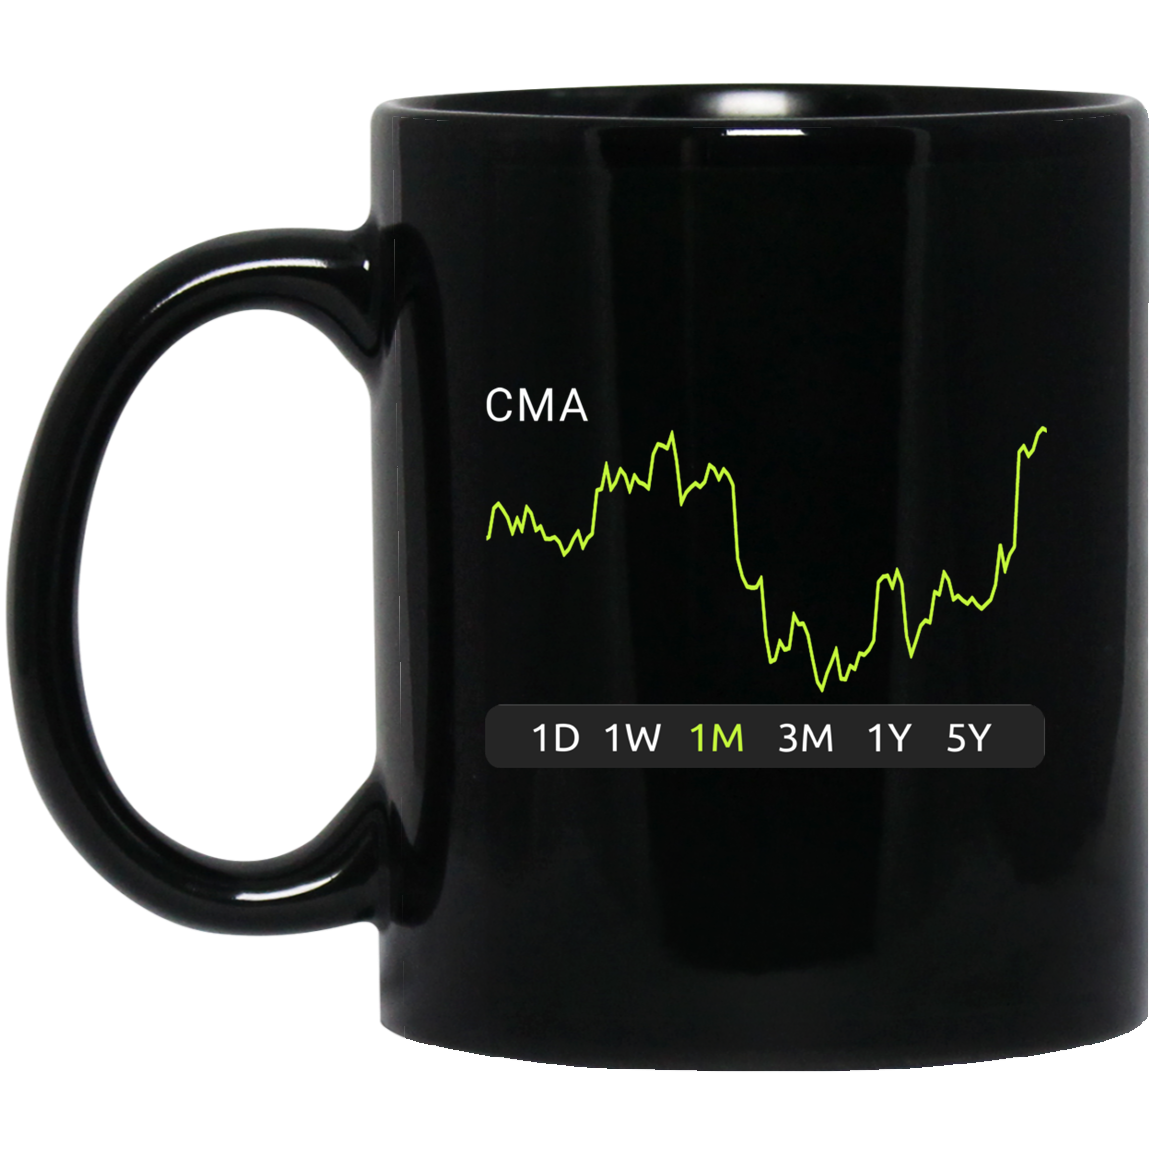 CMA Stock 1m Mug